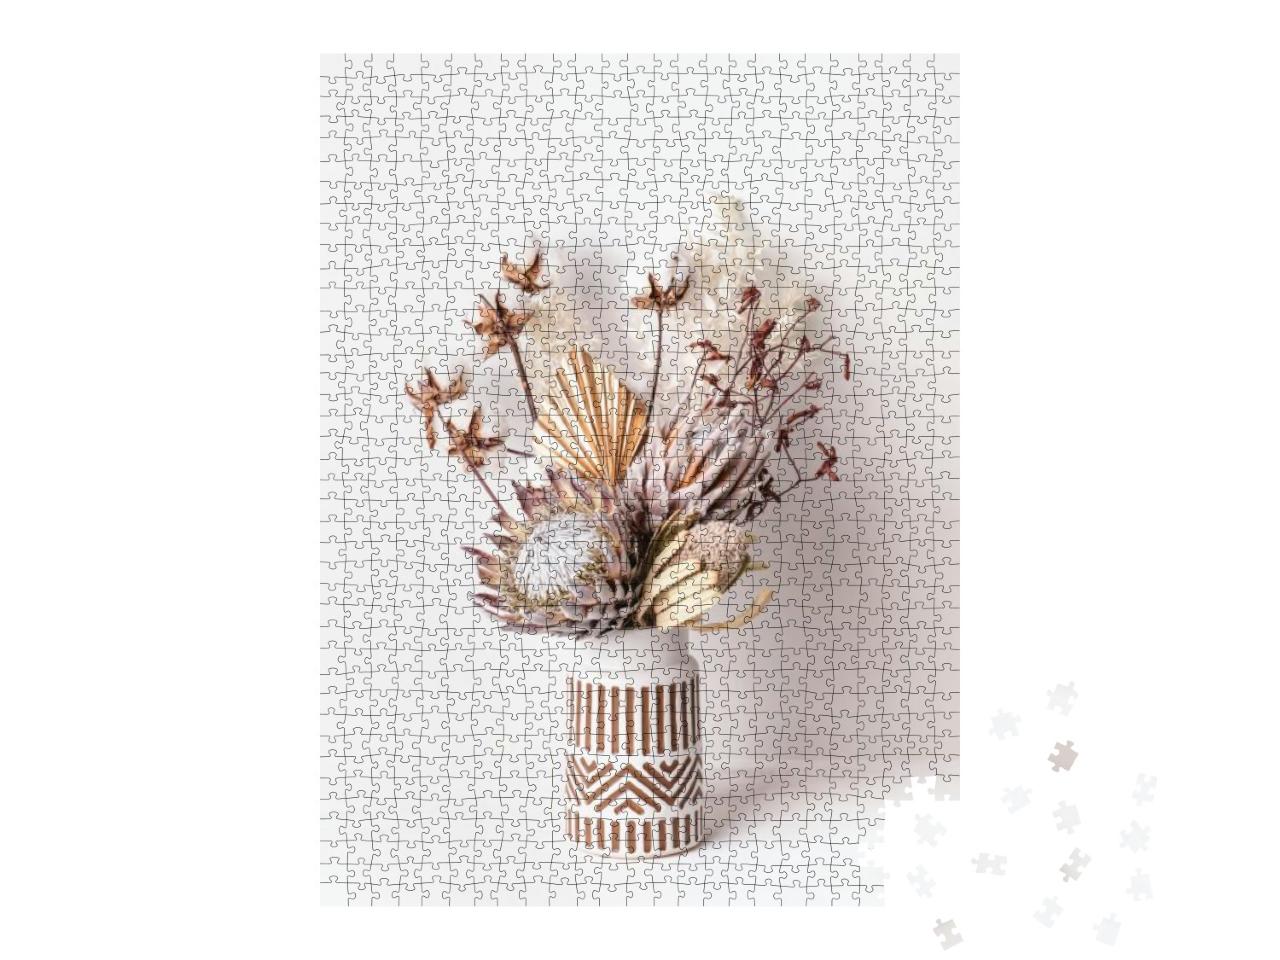 Beautiful Dried Flower Arrangement in a Stylish Ceramic W... Jigsaw Puzzle with 1000 pieces